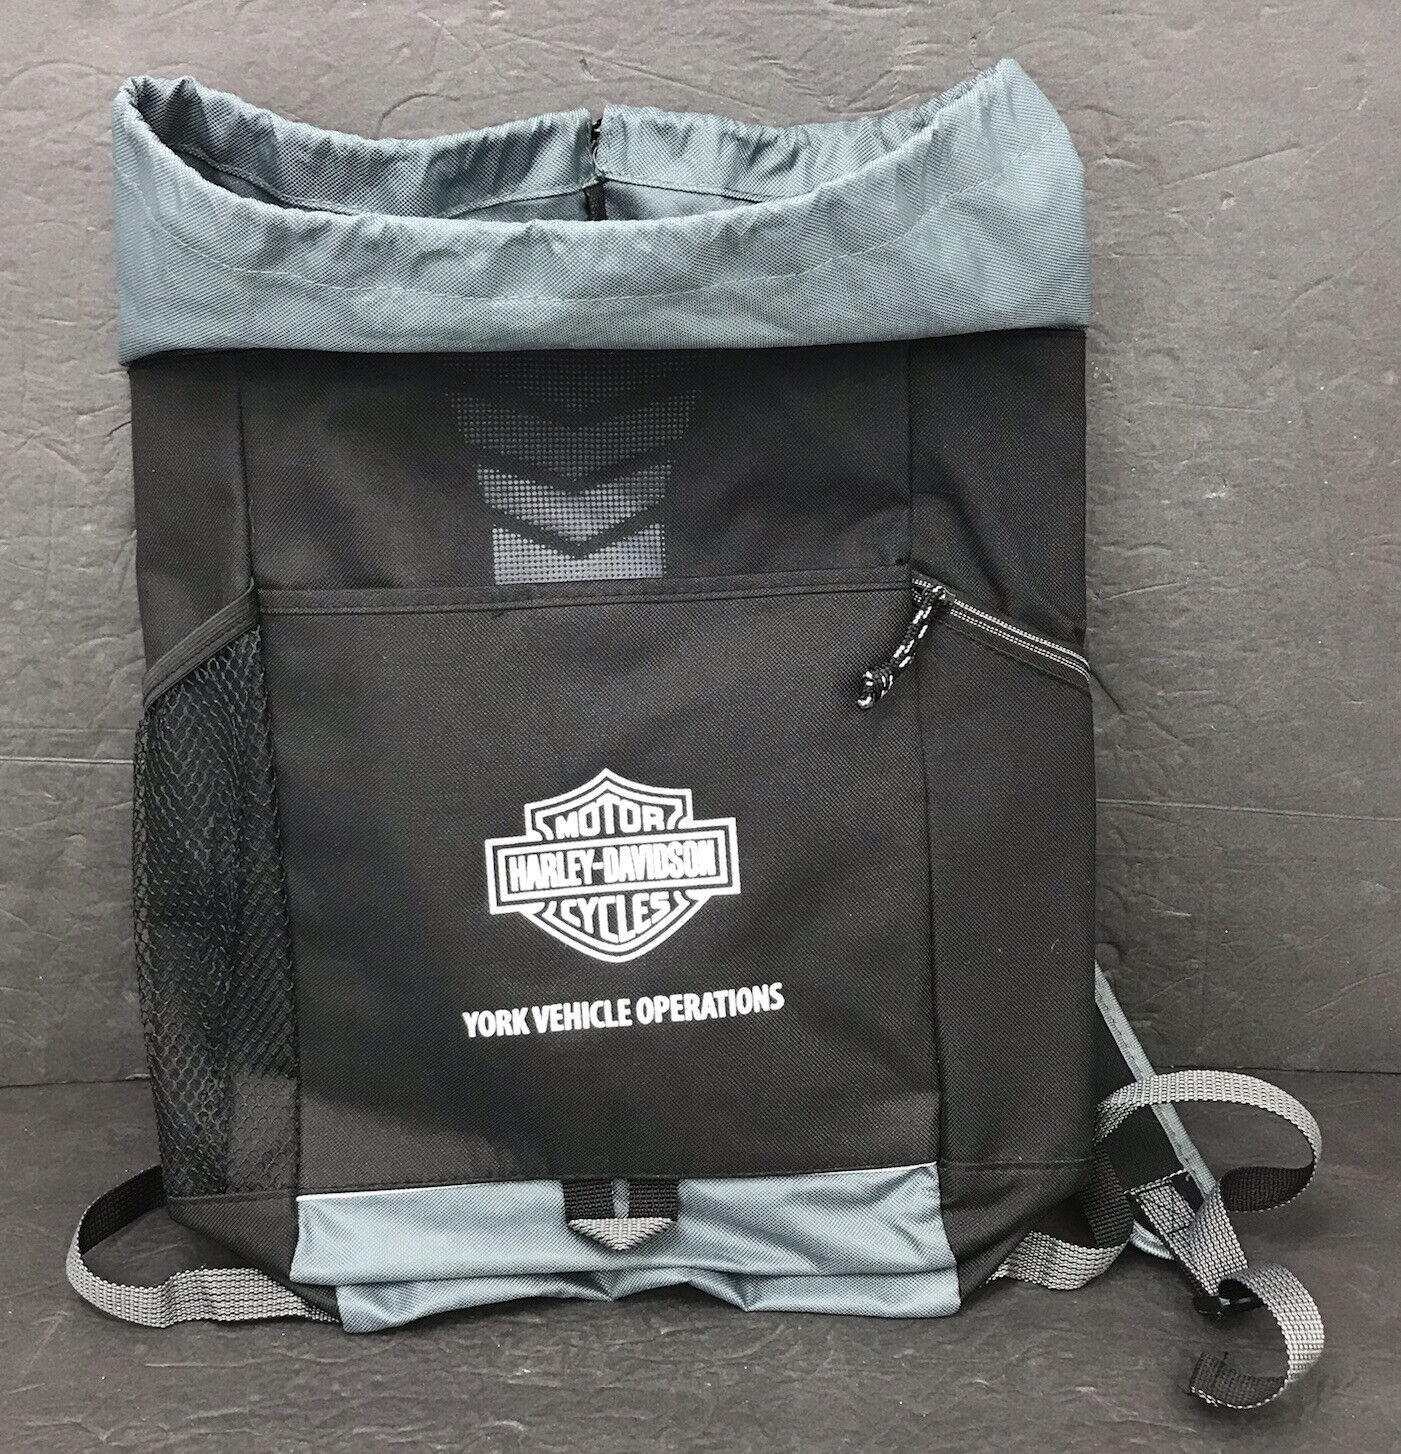 Harley Davidson Drawstring Cinch Bag Backpack York Plant Vehicle Operations